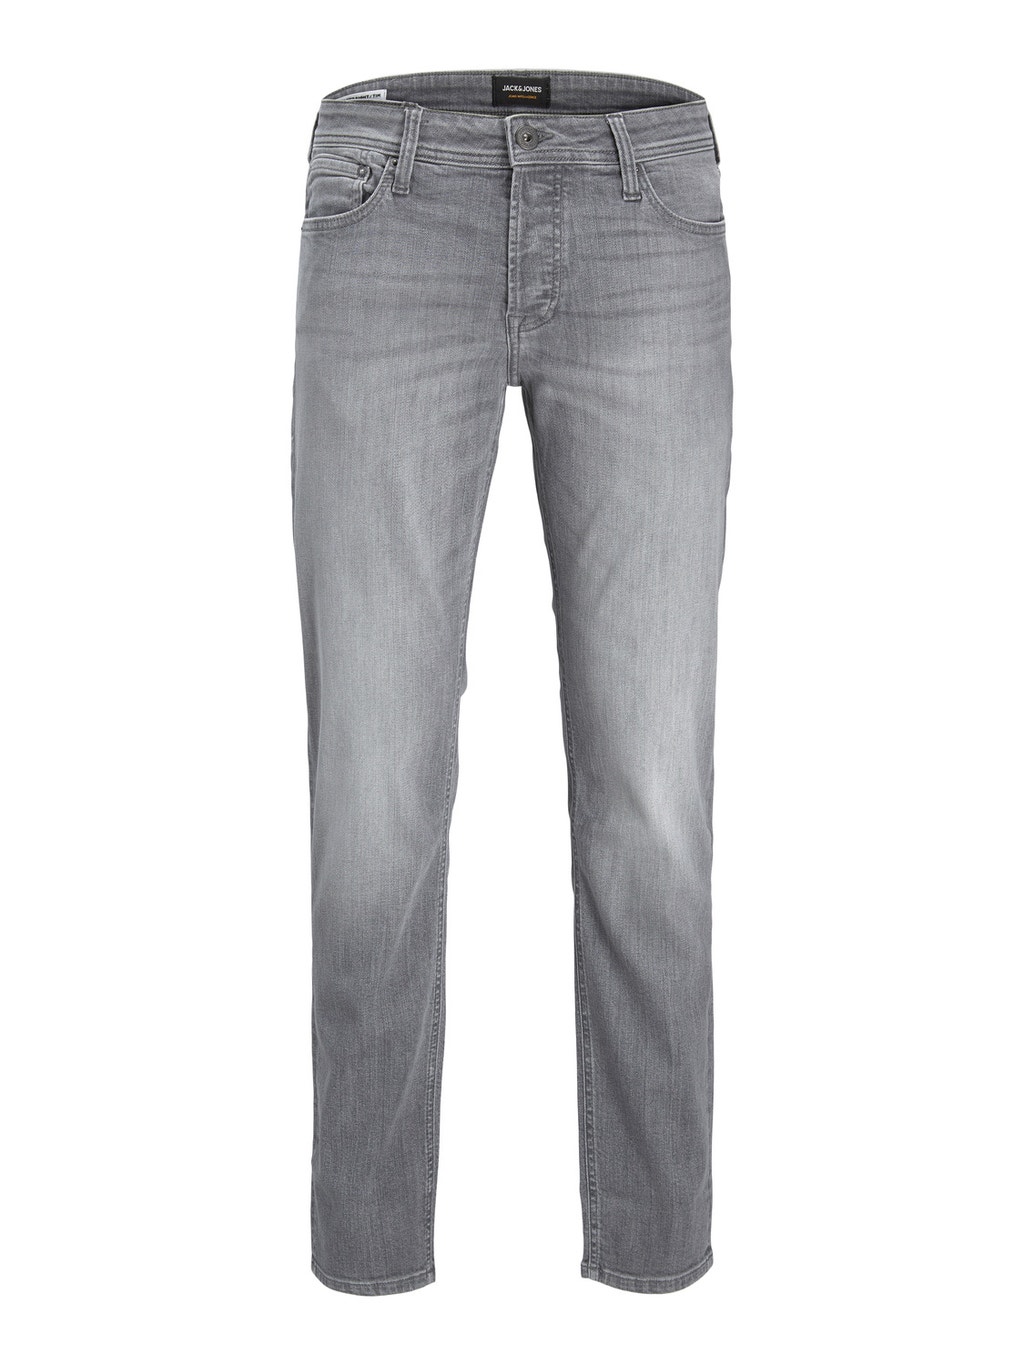 Tim Original AGI 787 fit jeans | Medium Grey | &